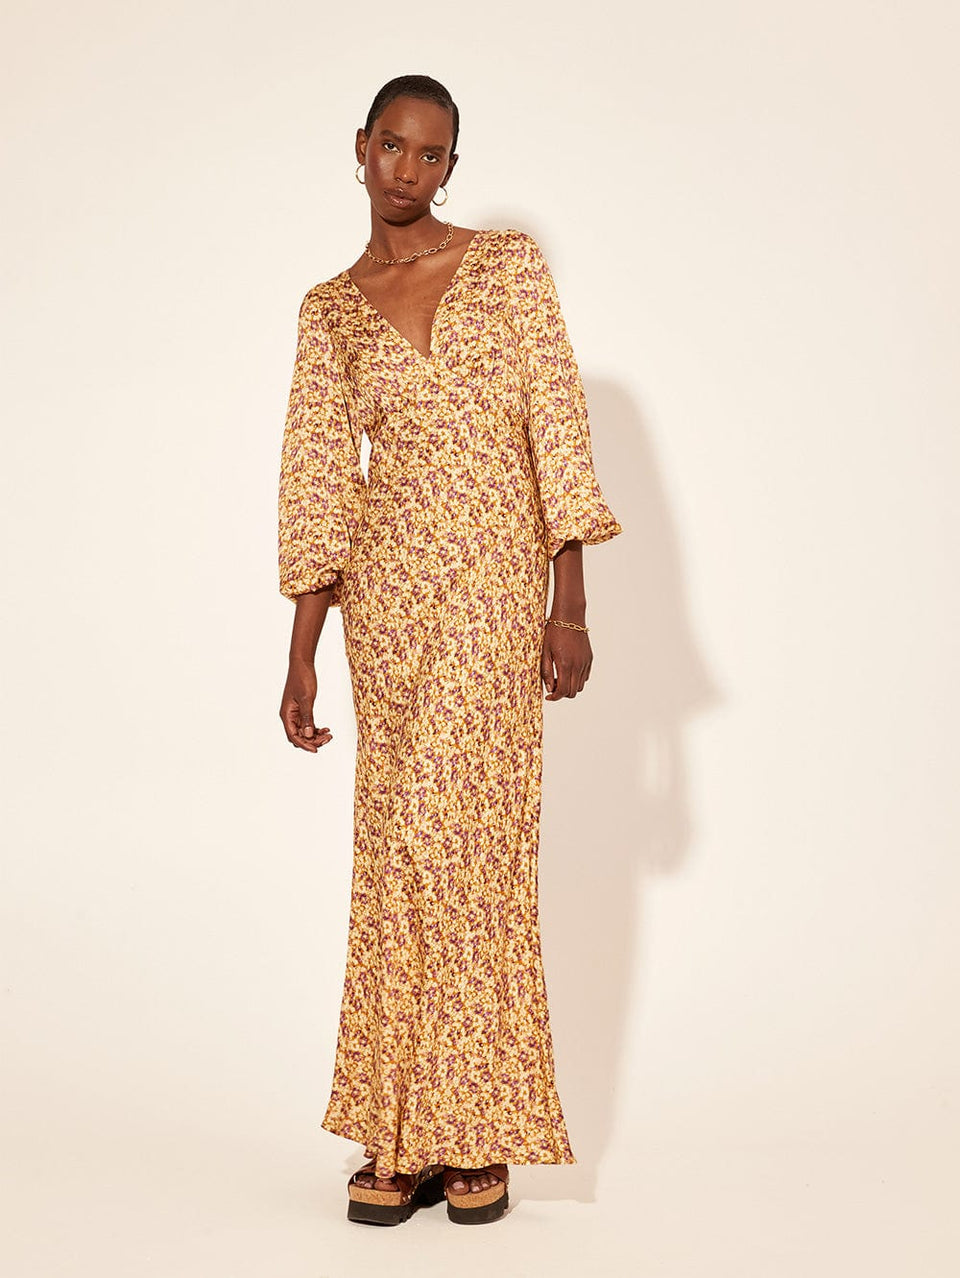 CAITZR Beach Casual Floral Maxi Long Dress For Women Summer V Neck Short  Sleeve Ethnic Style Sundress 